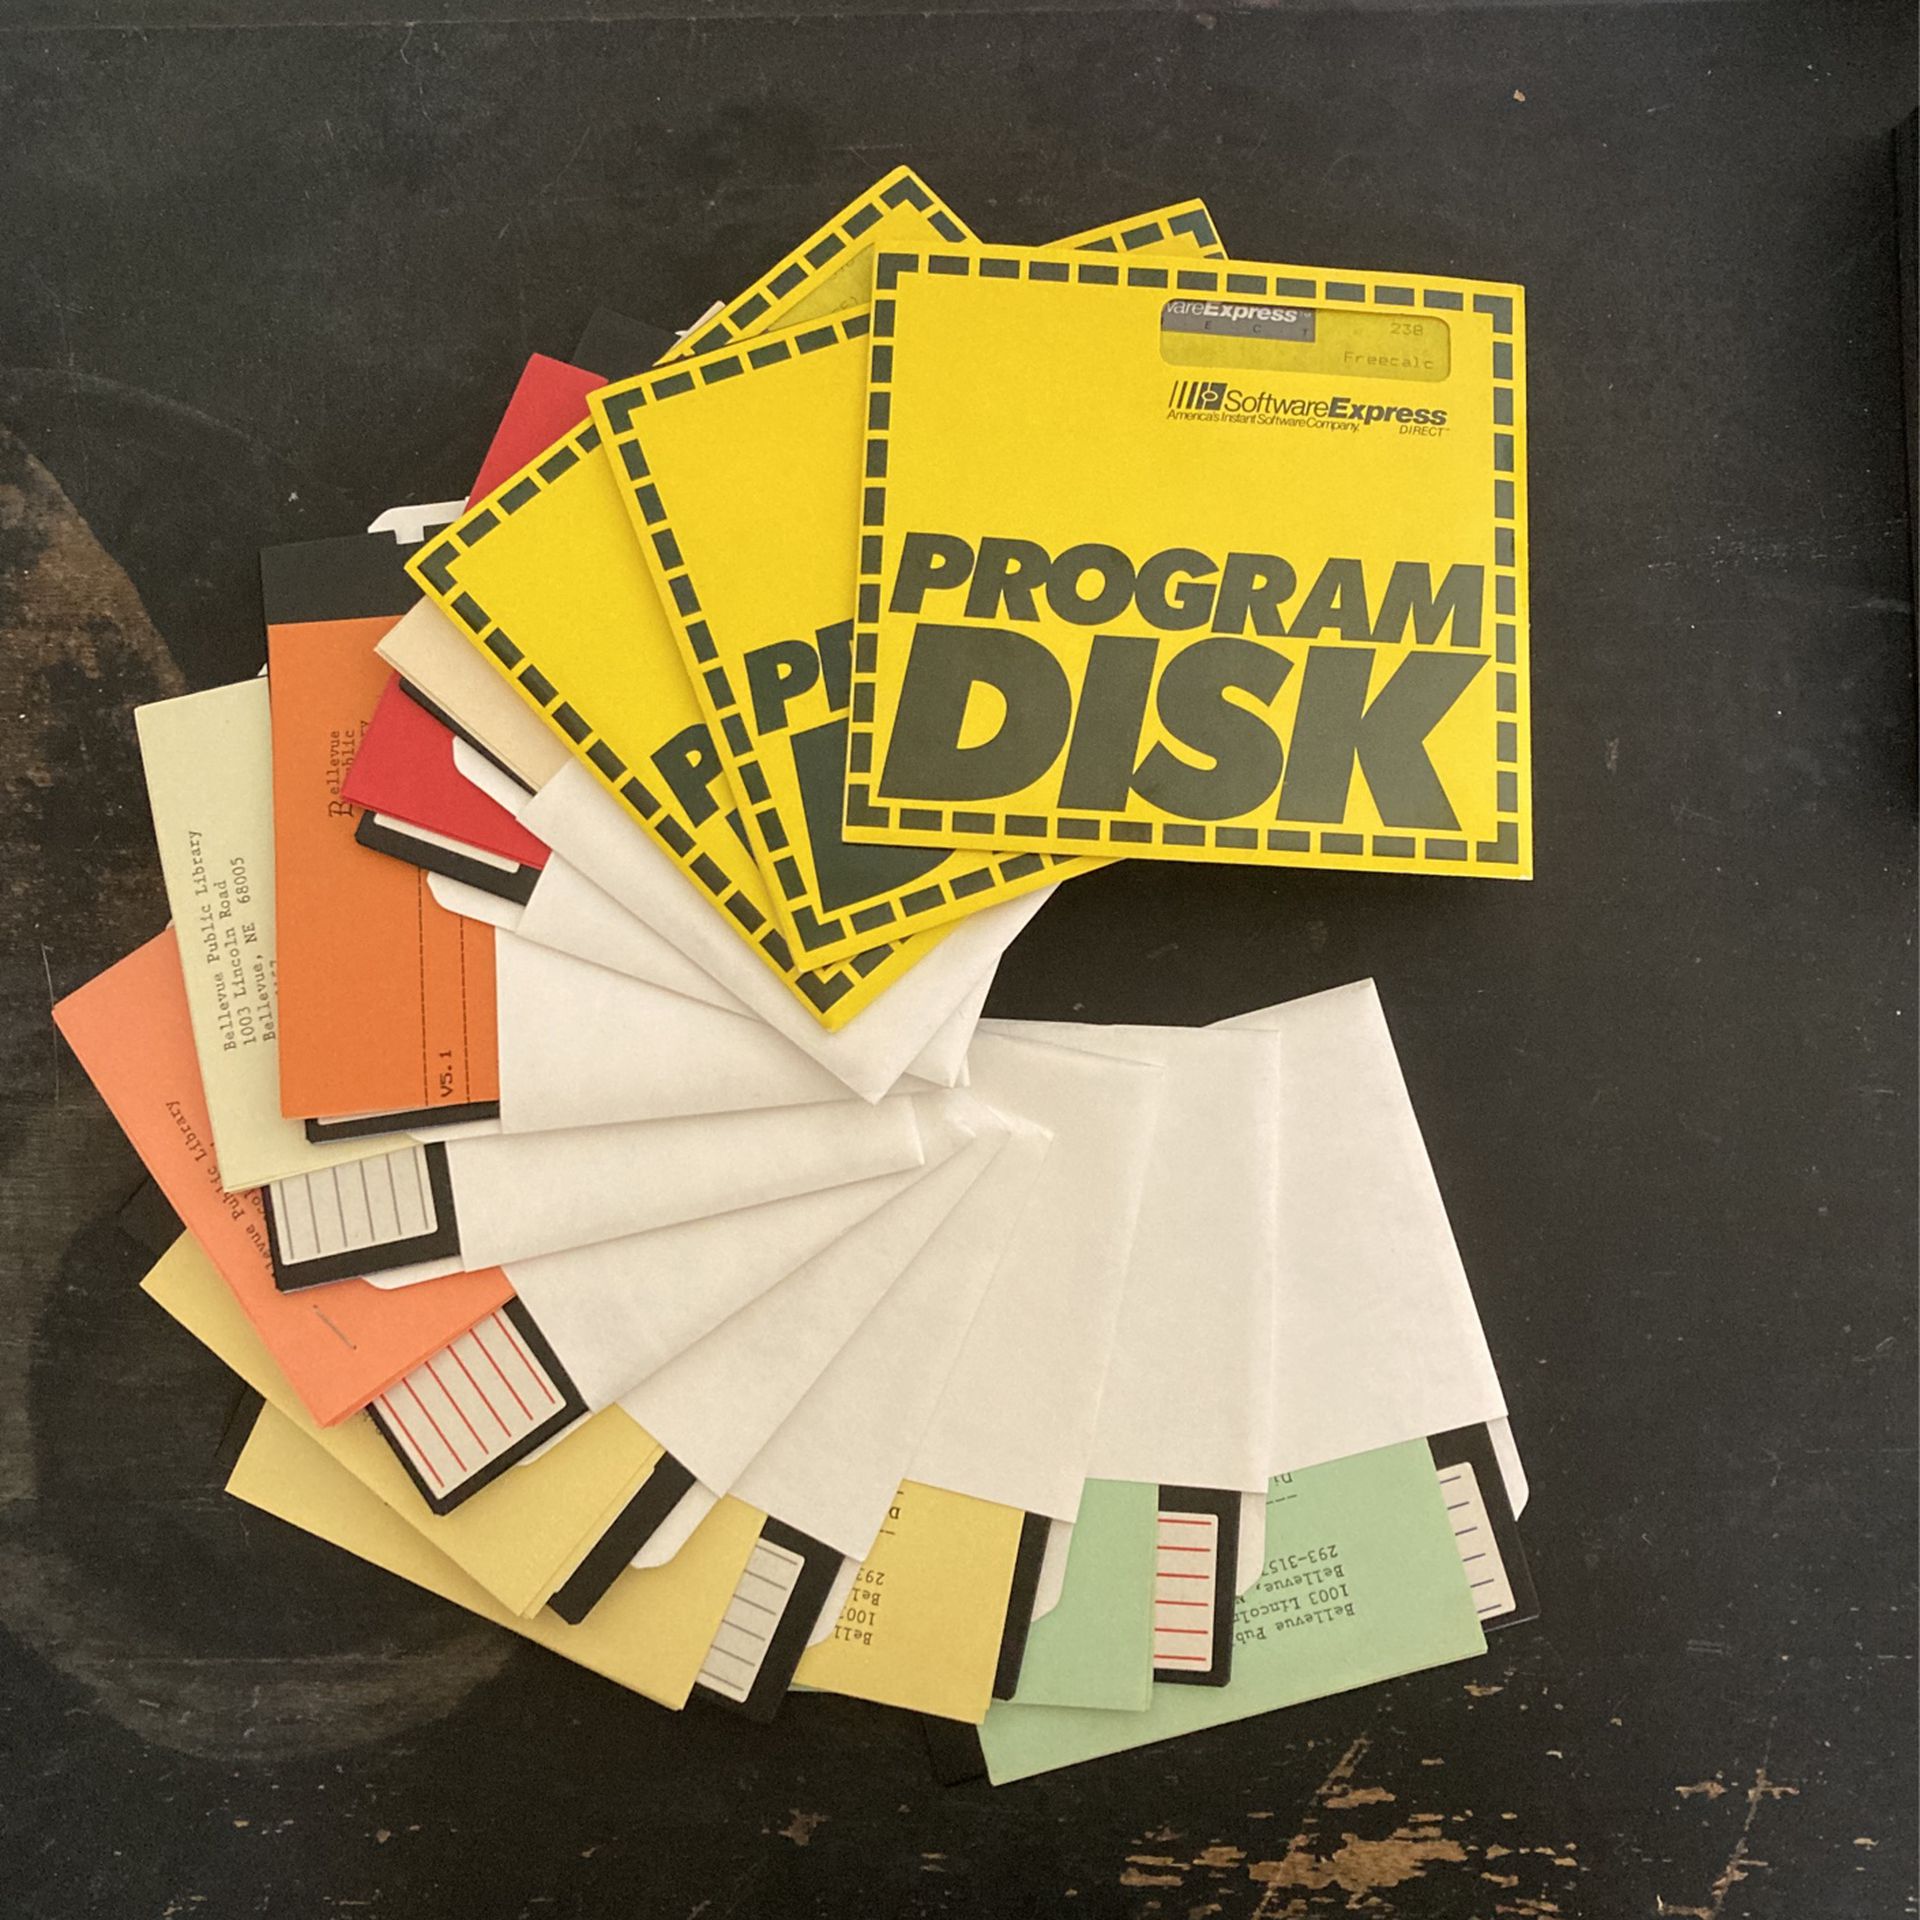 12 Software Programs on 5.25” Floppy Discs